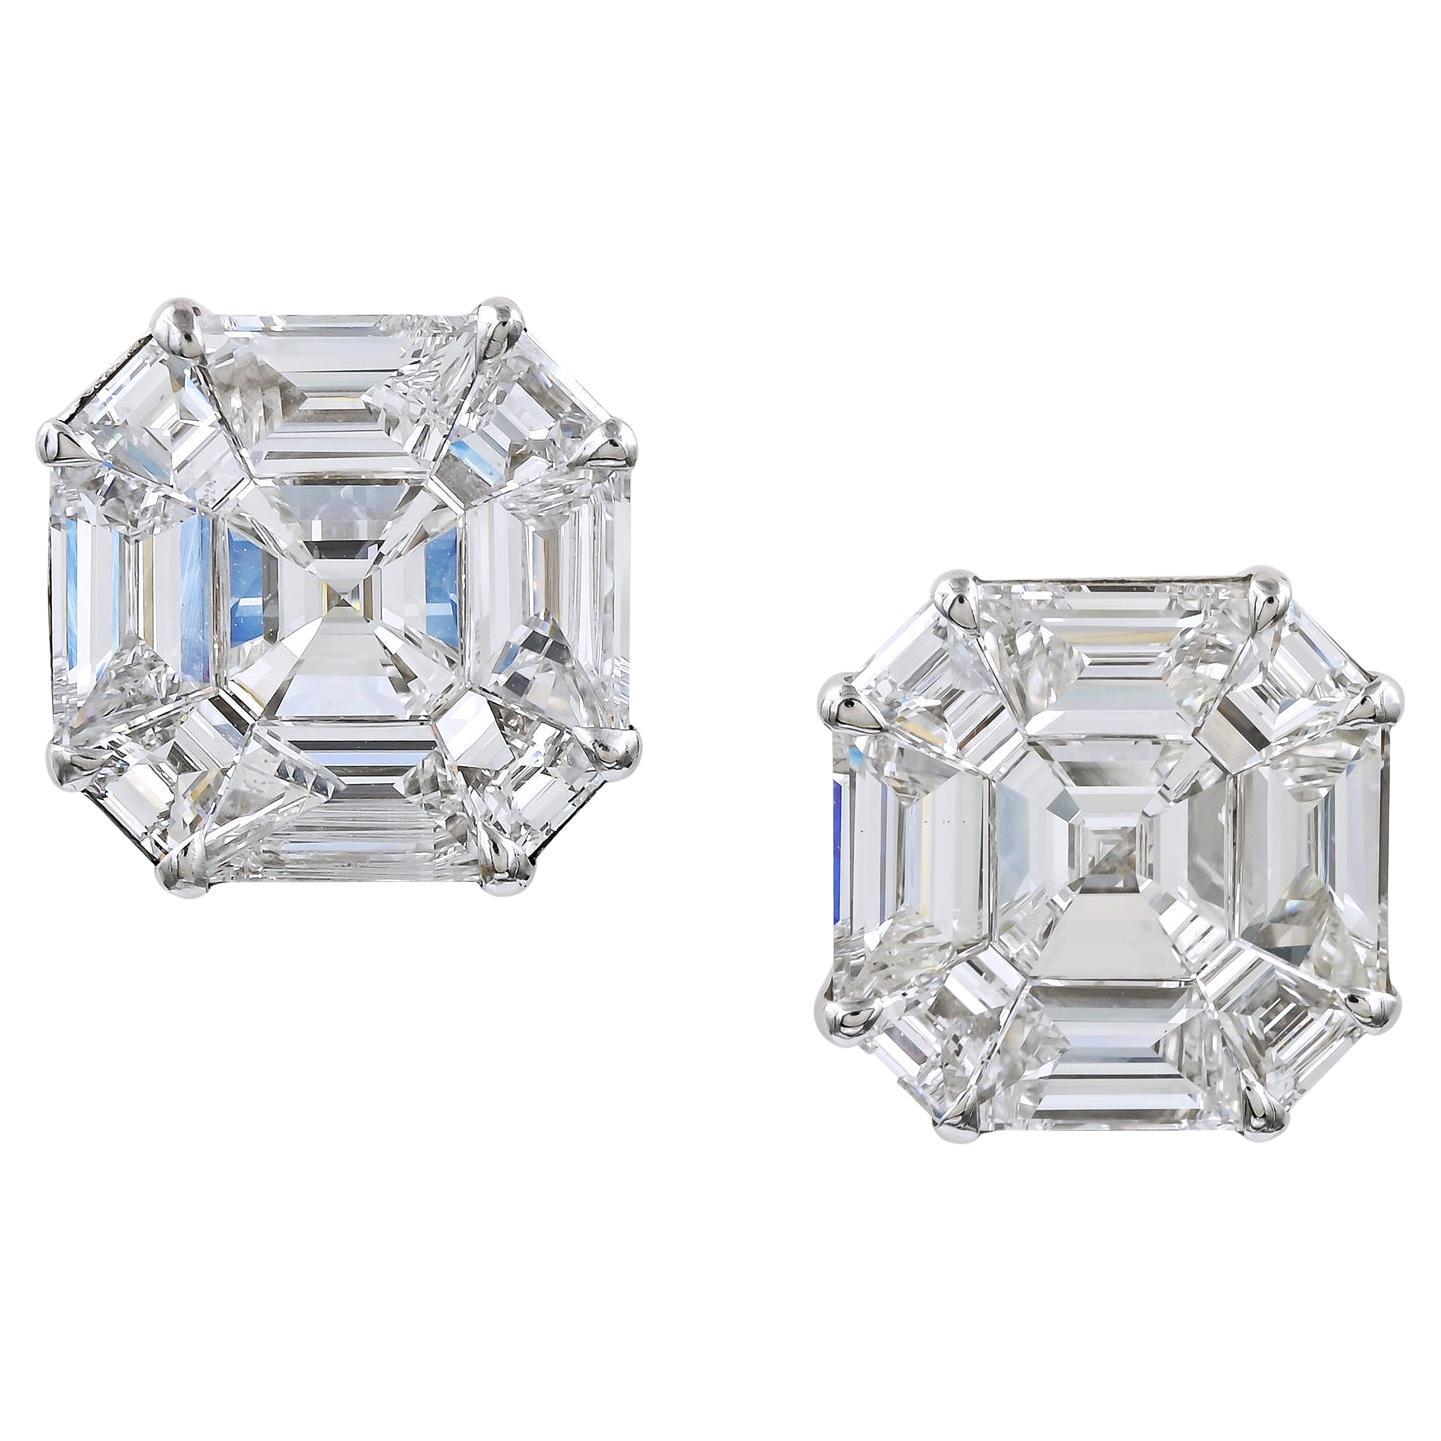 Spectra Fine Jewelry 10.74 Carats Illusion Asscher-shape Diamond Stud Earrings